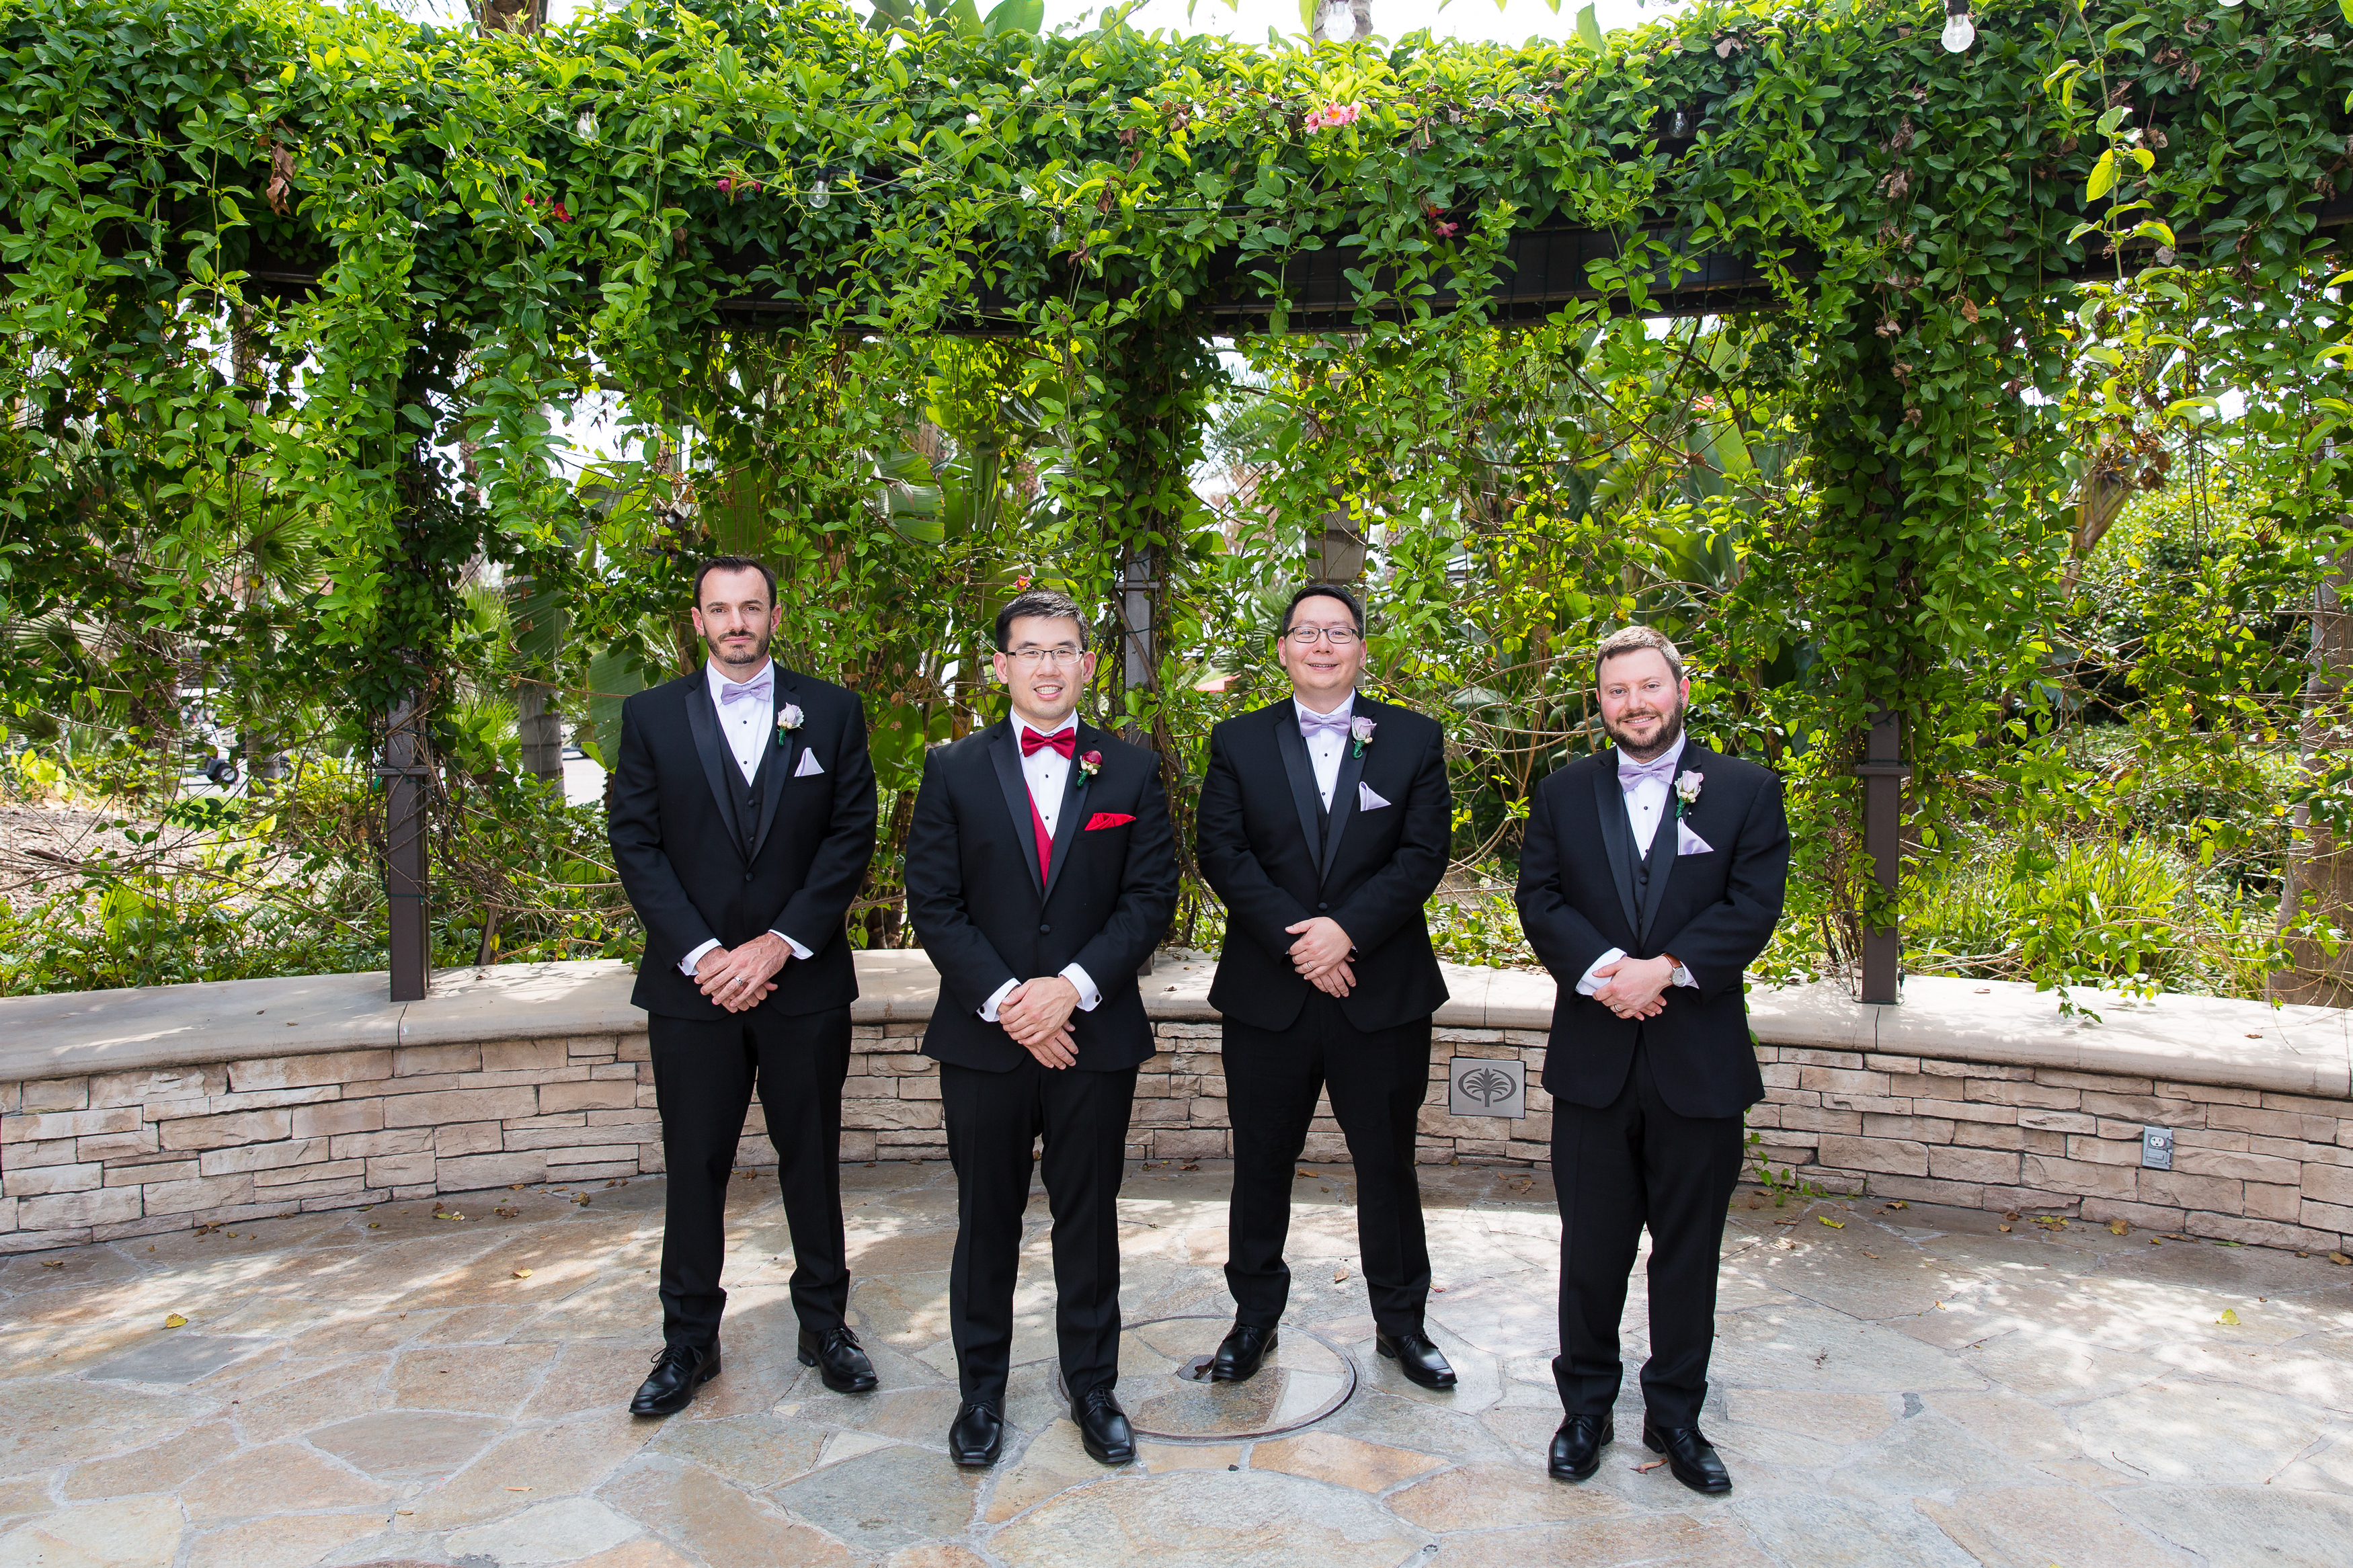 Groom smiling with groomsmen in black tuxedos